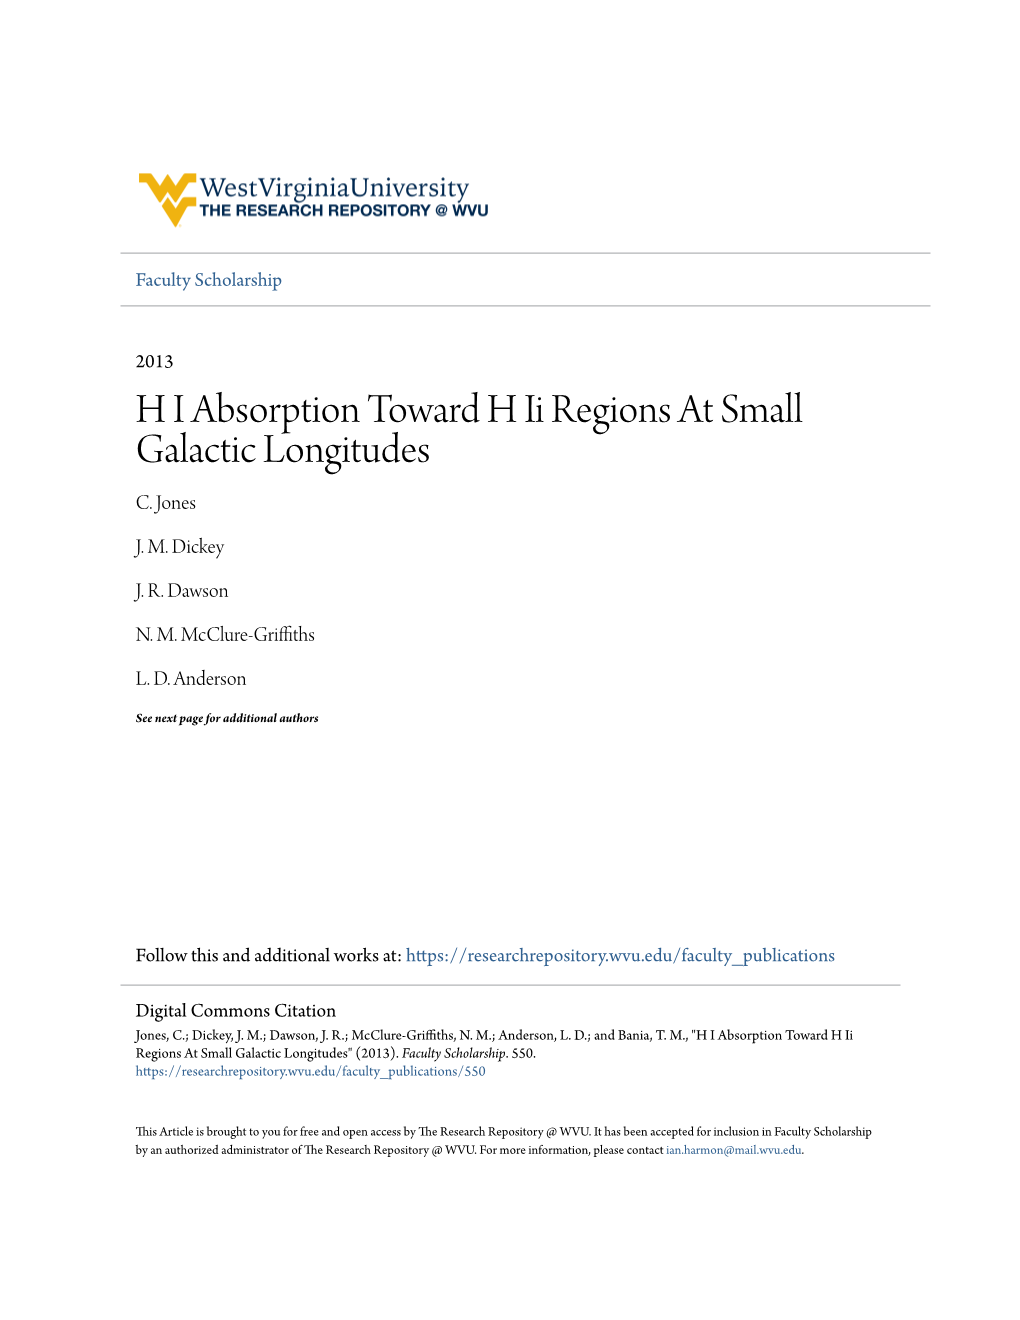 H I Absorption Toward H Ii Regions at Small Galactic Longitudes C